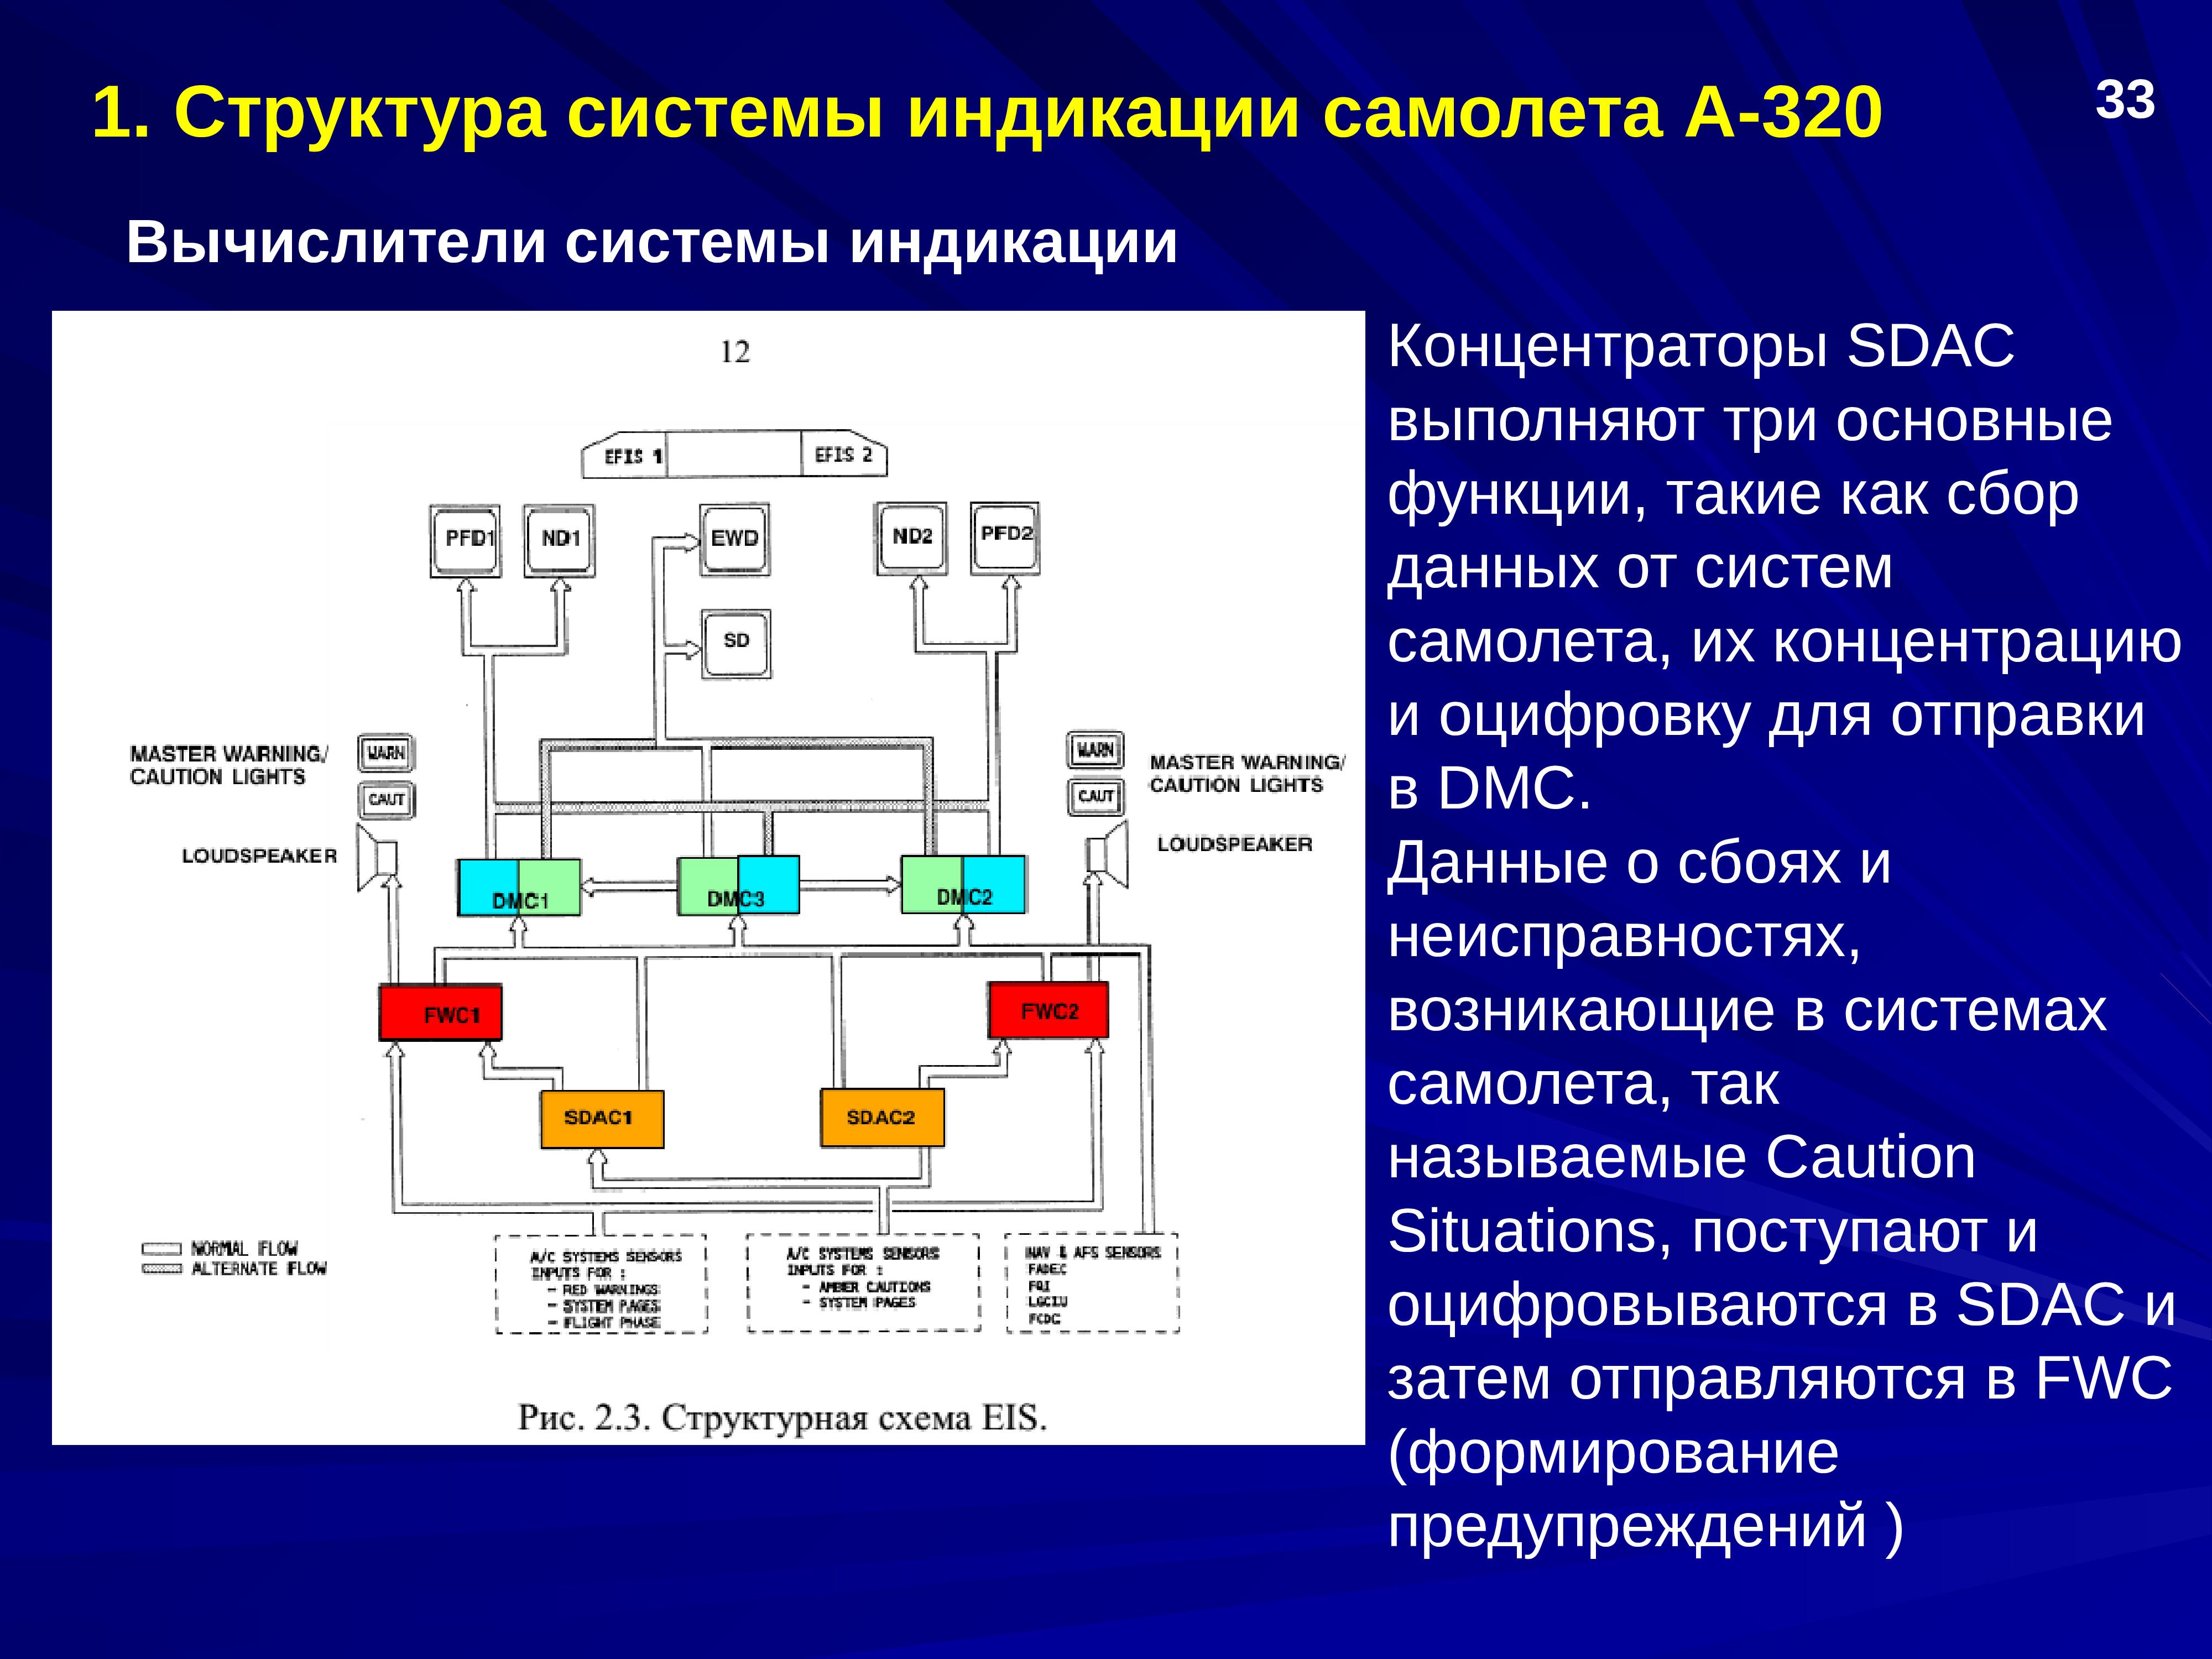 Структура системы индикации самолета а320